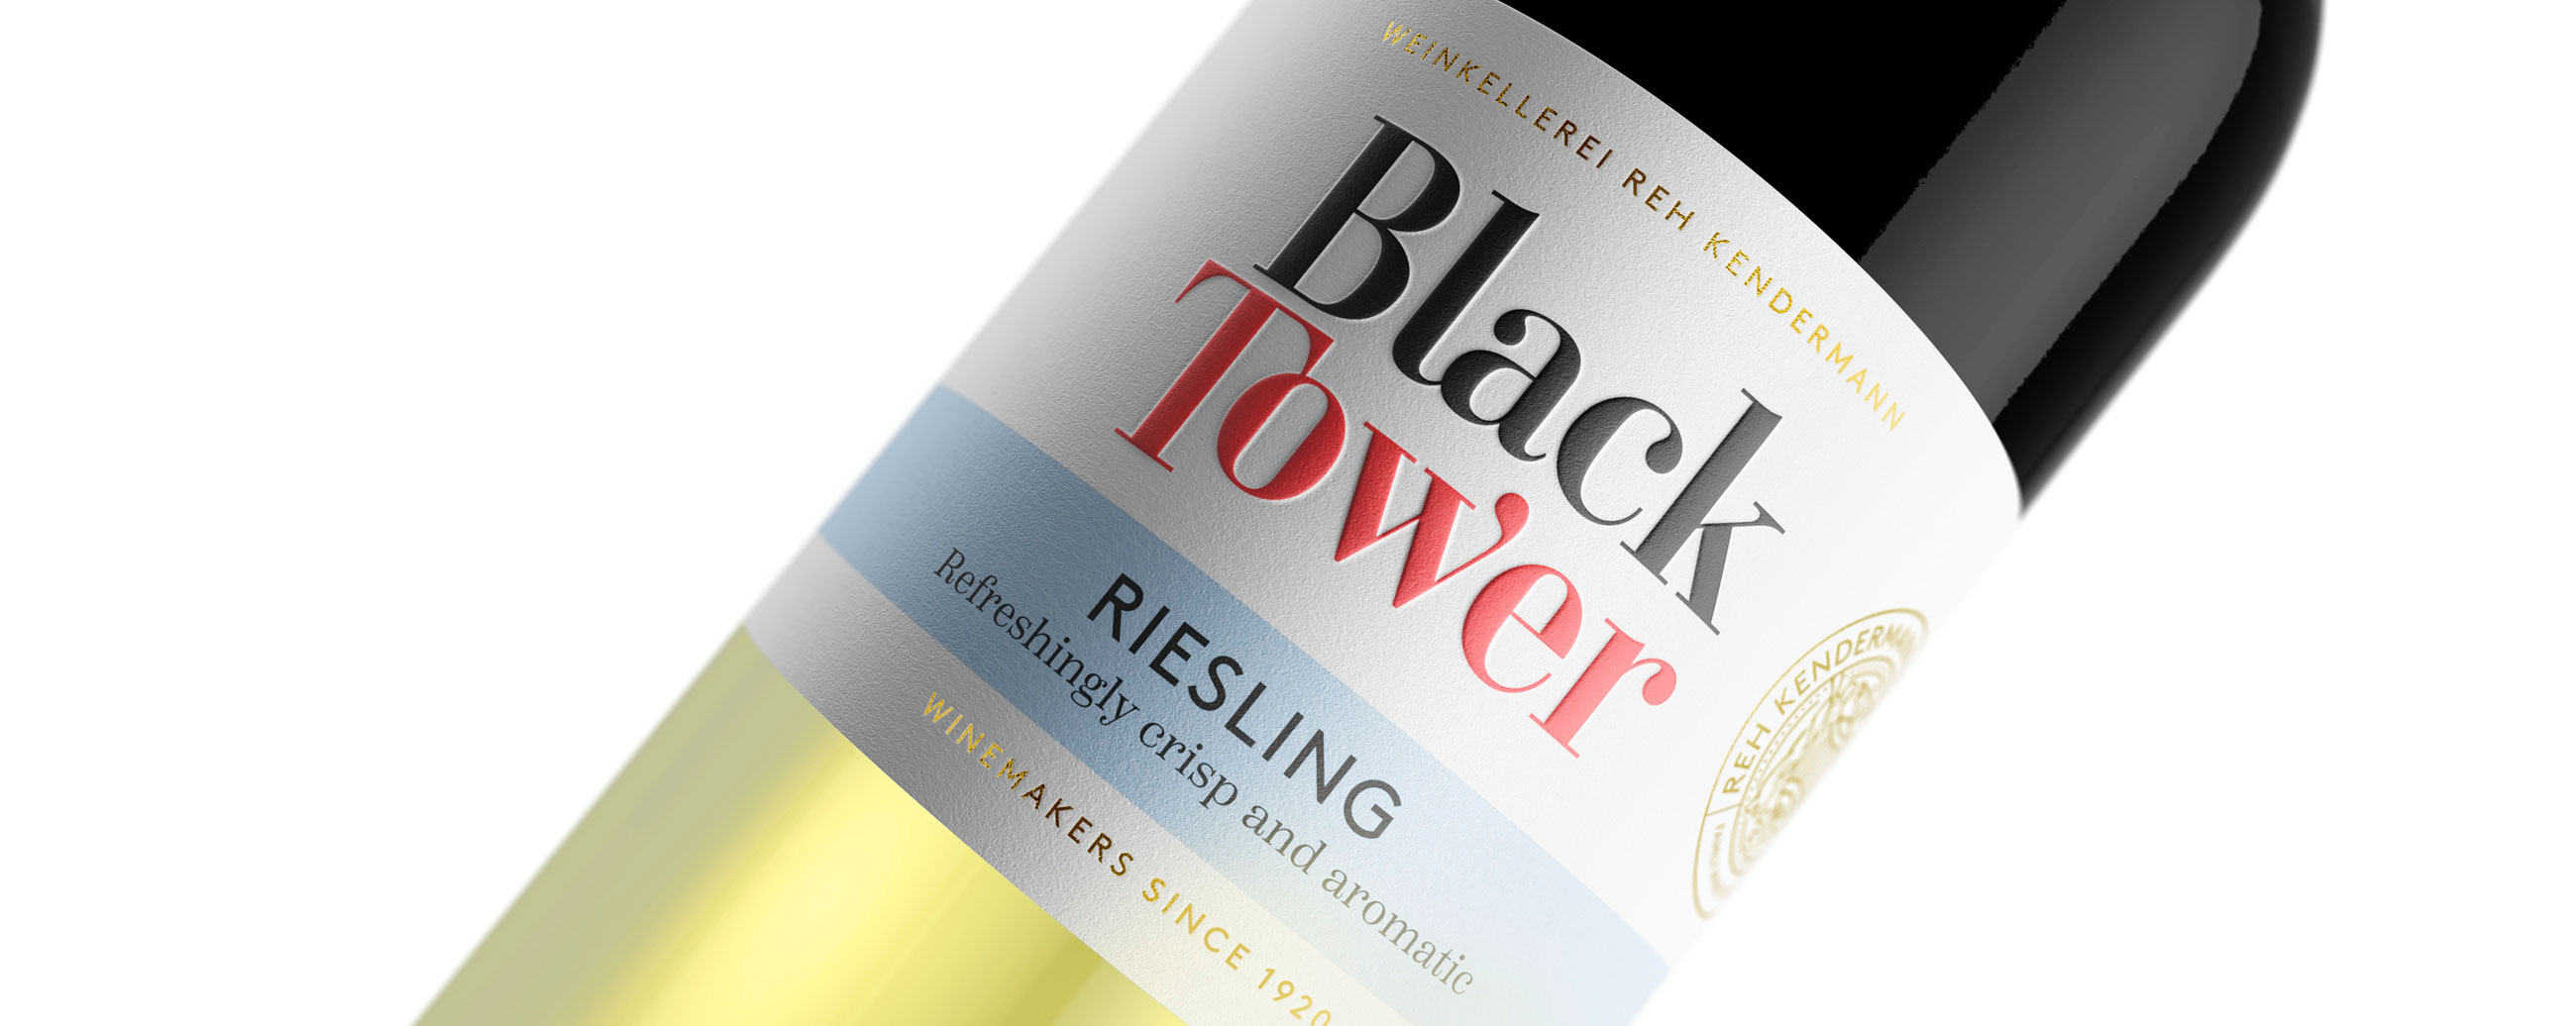 Black Tower Riesling wine vin. Emballasje packaging design.